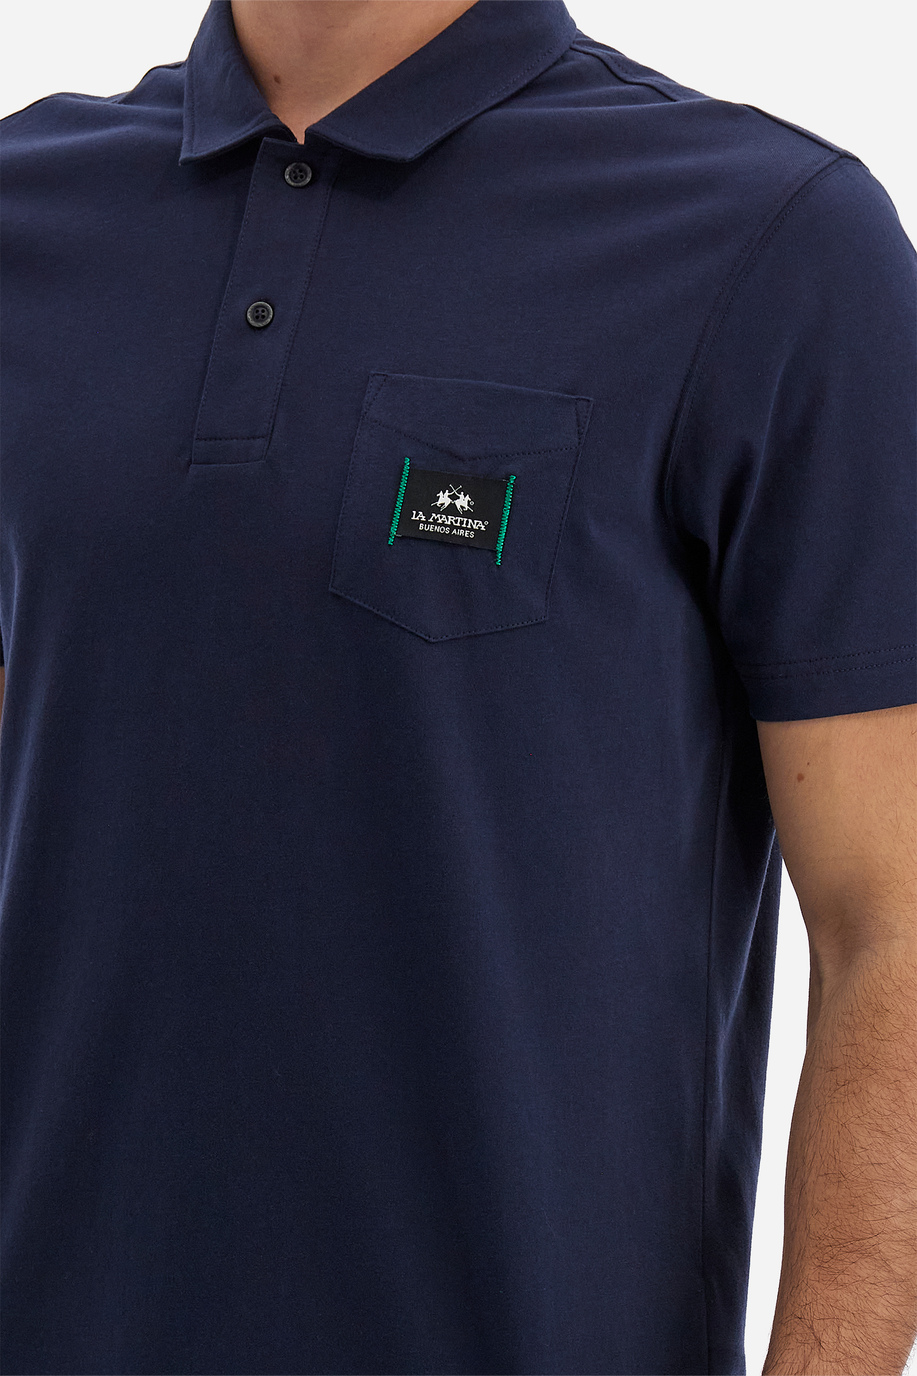 Herren-Kurzarm-Poloshirt Logos mit flacher Minitasche in Volltonfarbe - Vasant - Logos | La Martina - Official Online Shop